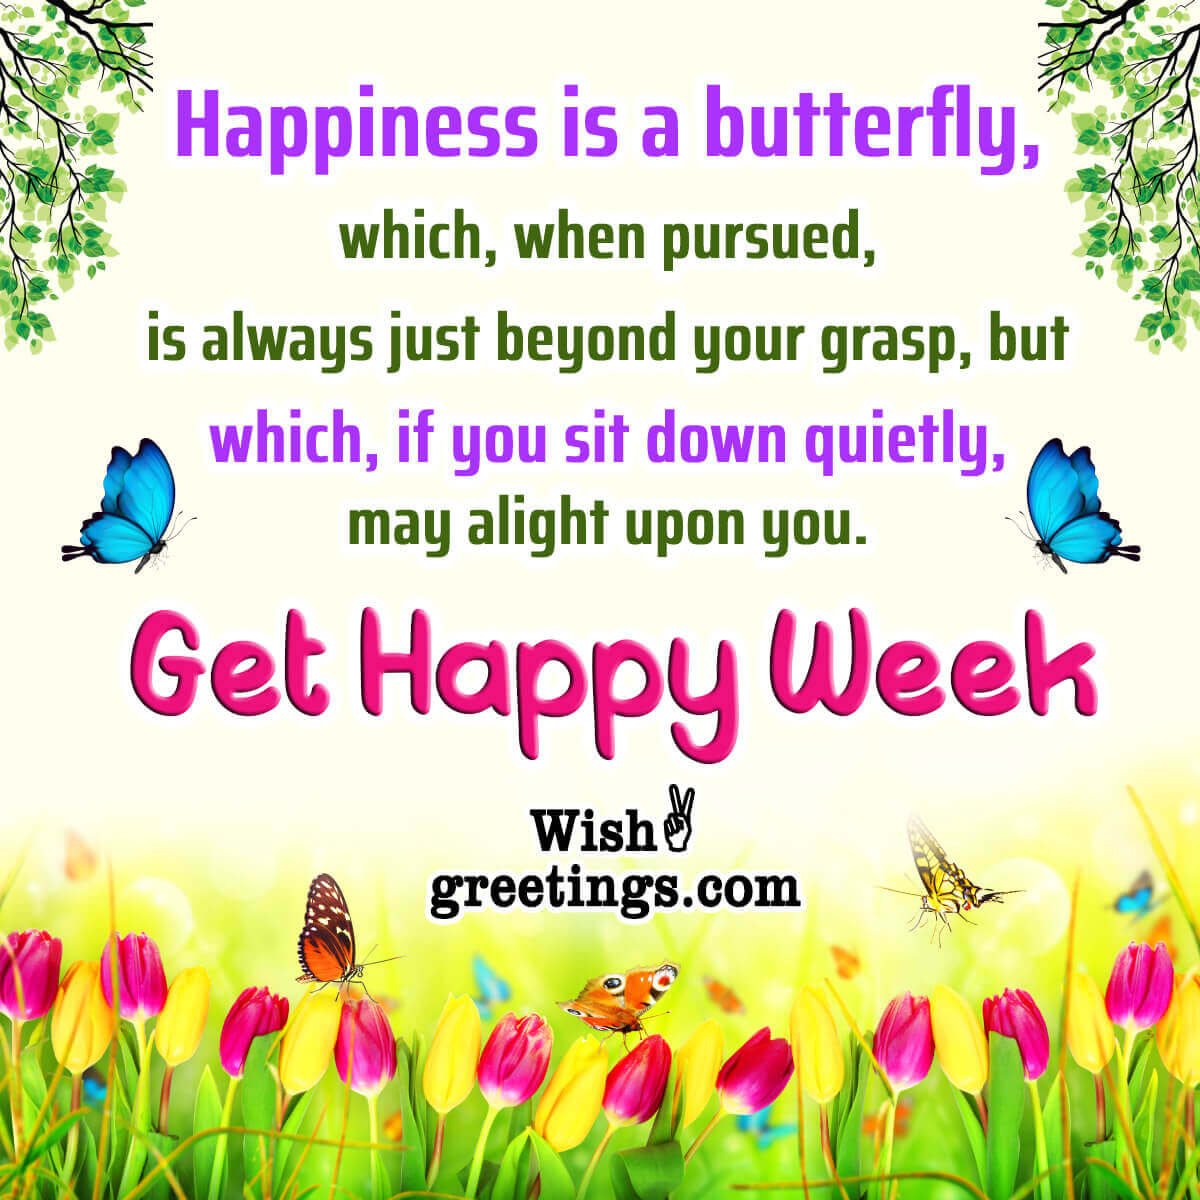 Get Happy Week Message Photo